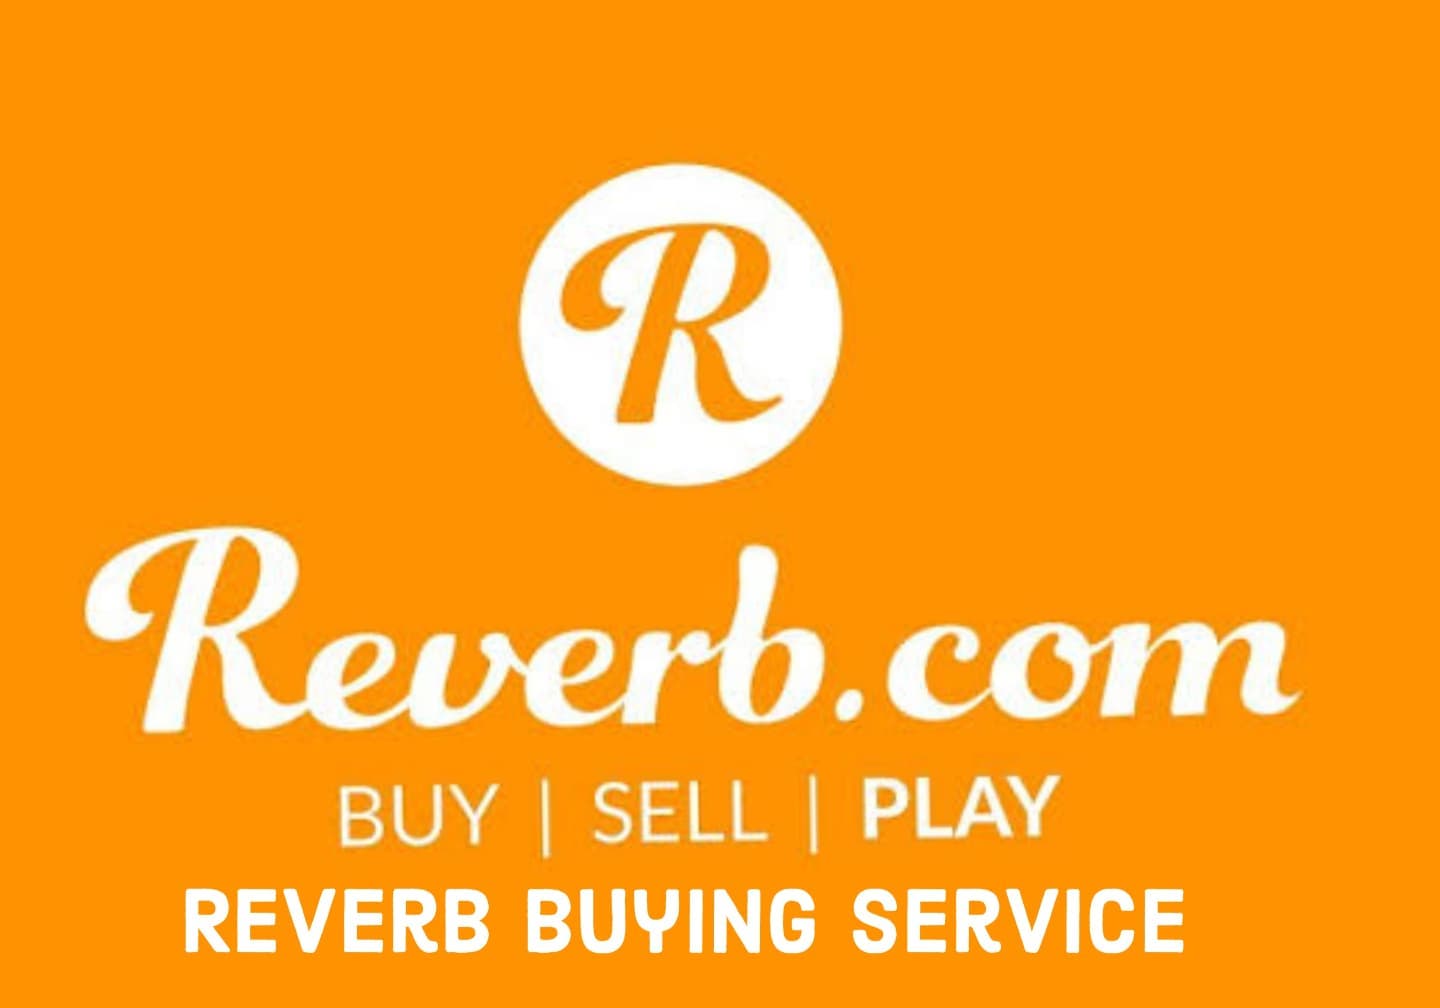 Beli musical gear di Reverb.com...